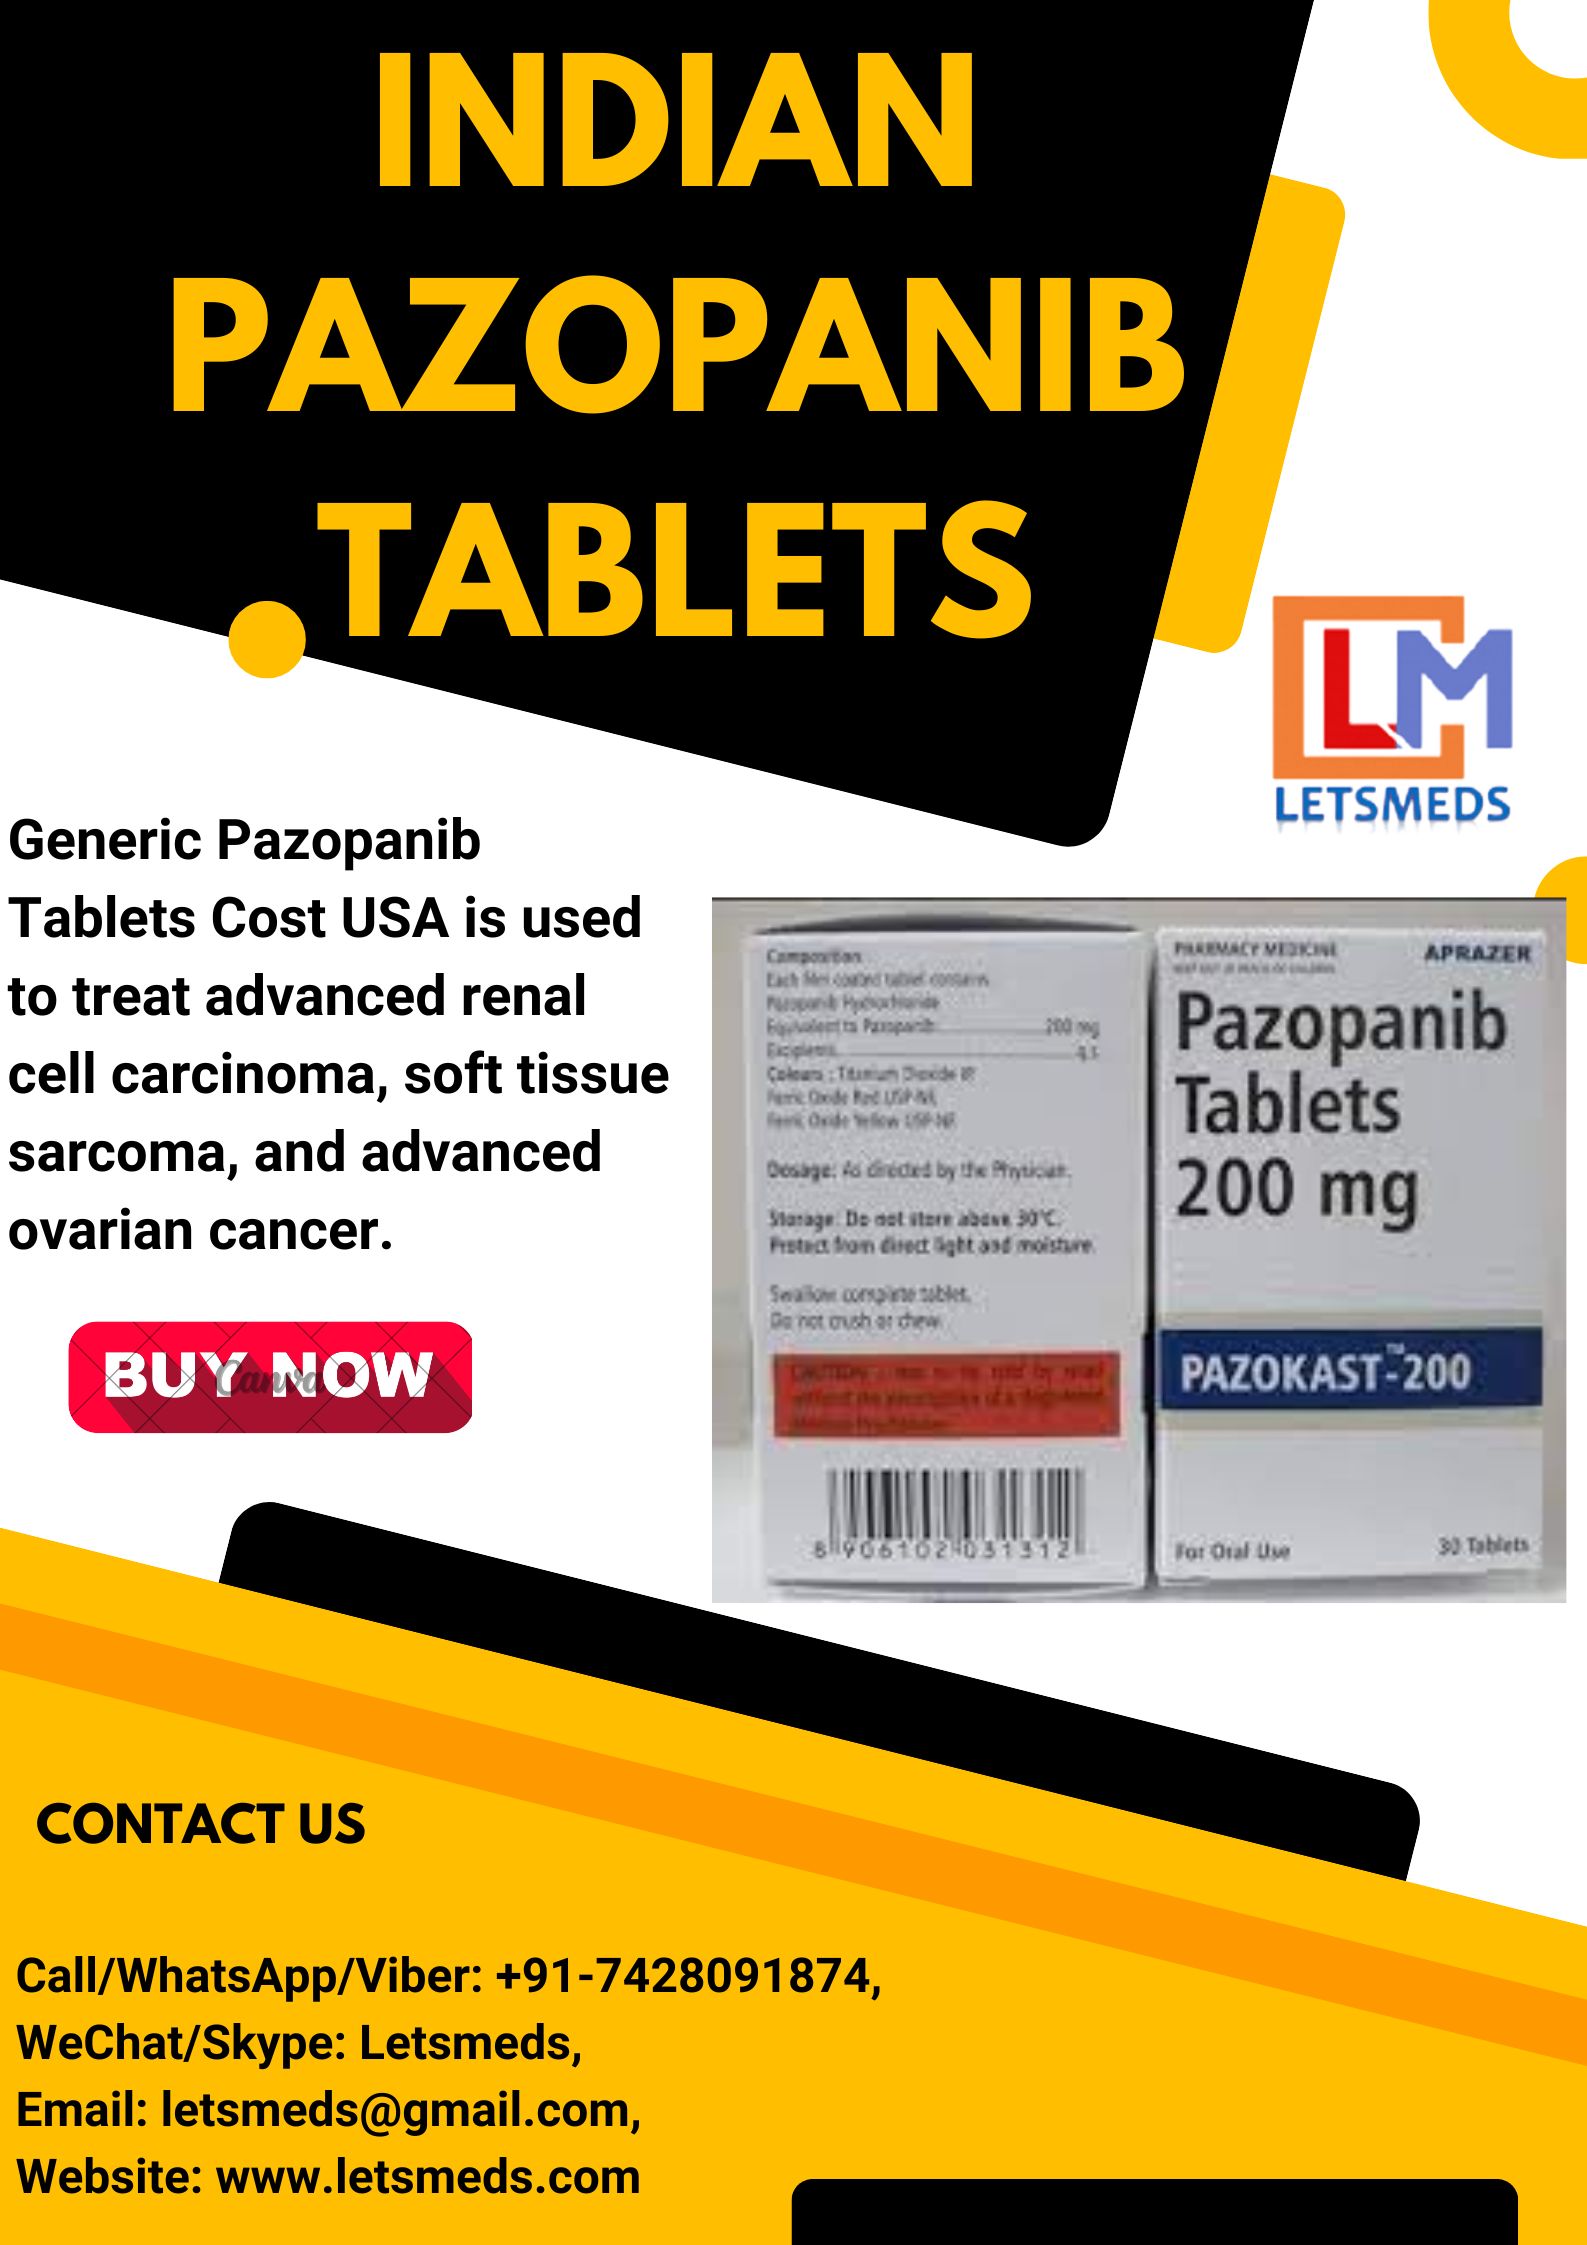 Indian Pazopanib Tablets Philippines.jpg